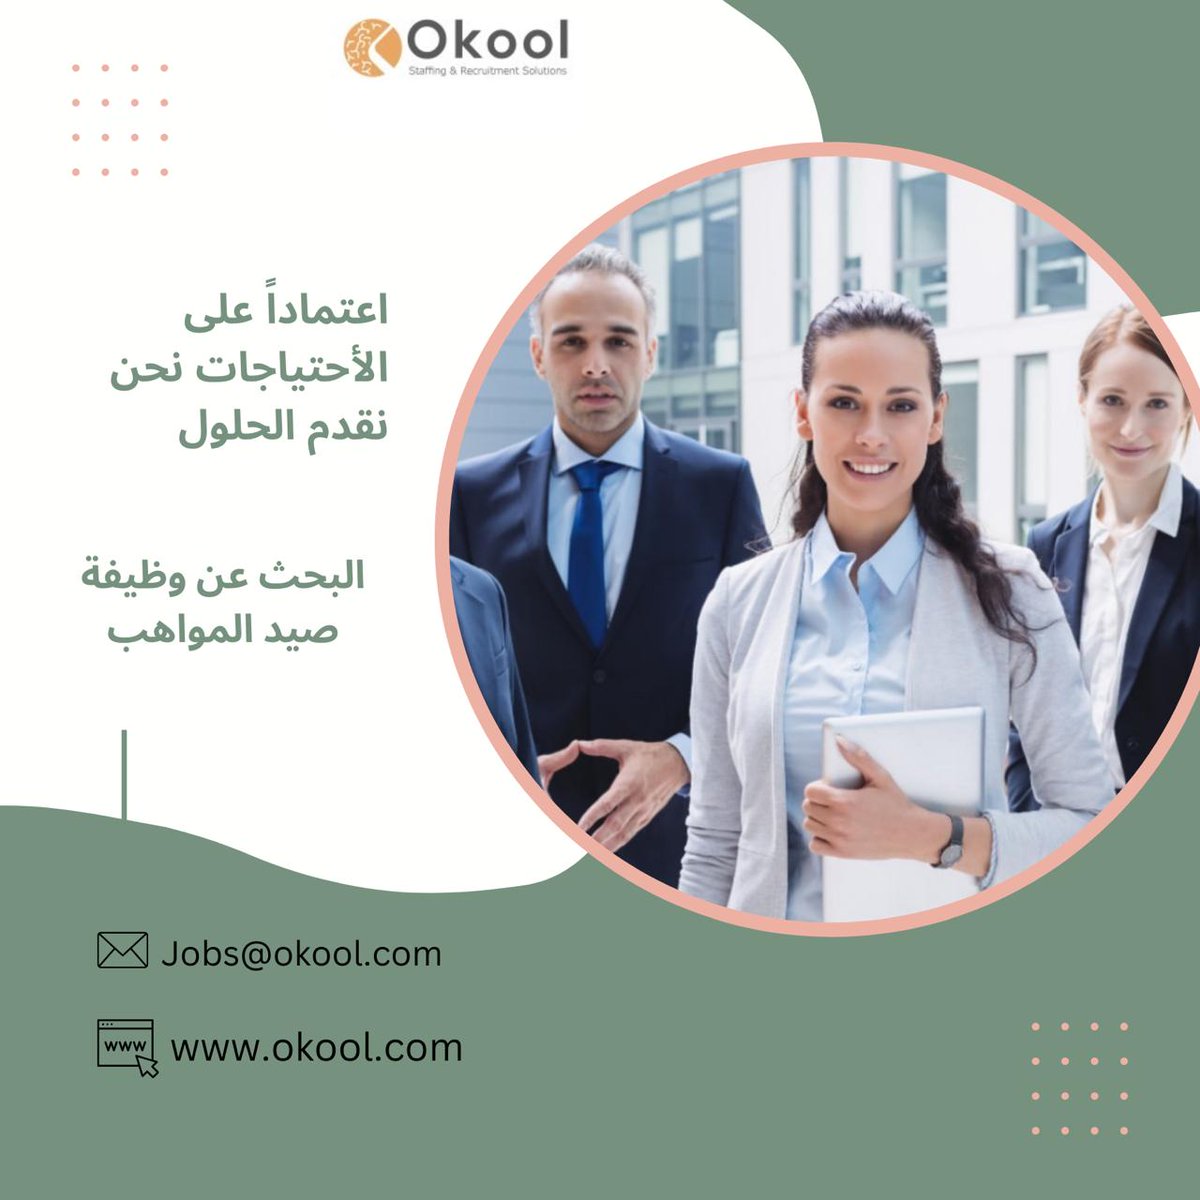 Okool Staffing and Recruiting Solutions

Visit us -> okool.com

#business #staffing #staffingsolutions #staffingcompany #staffingservices #recruiting #recruitment #recruitingjobs #service #dubai #abudhabi #emirates #uaebusiness #unitedarabemirates #uae #okool